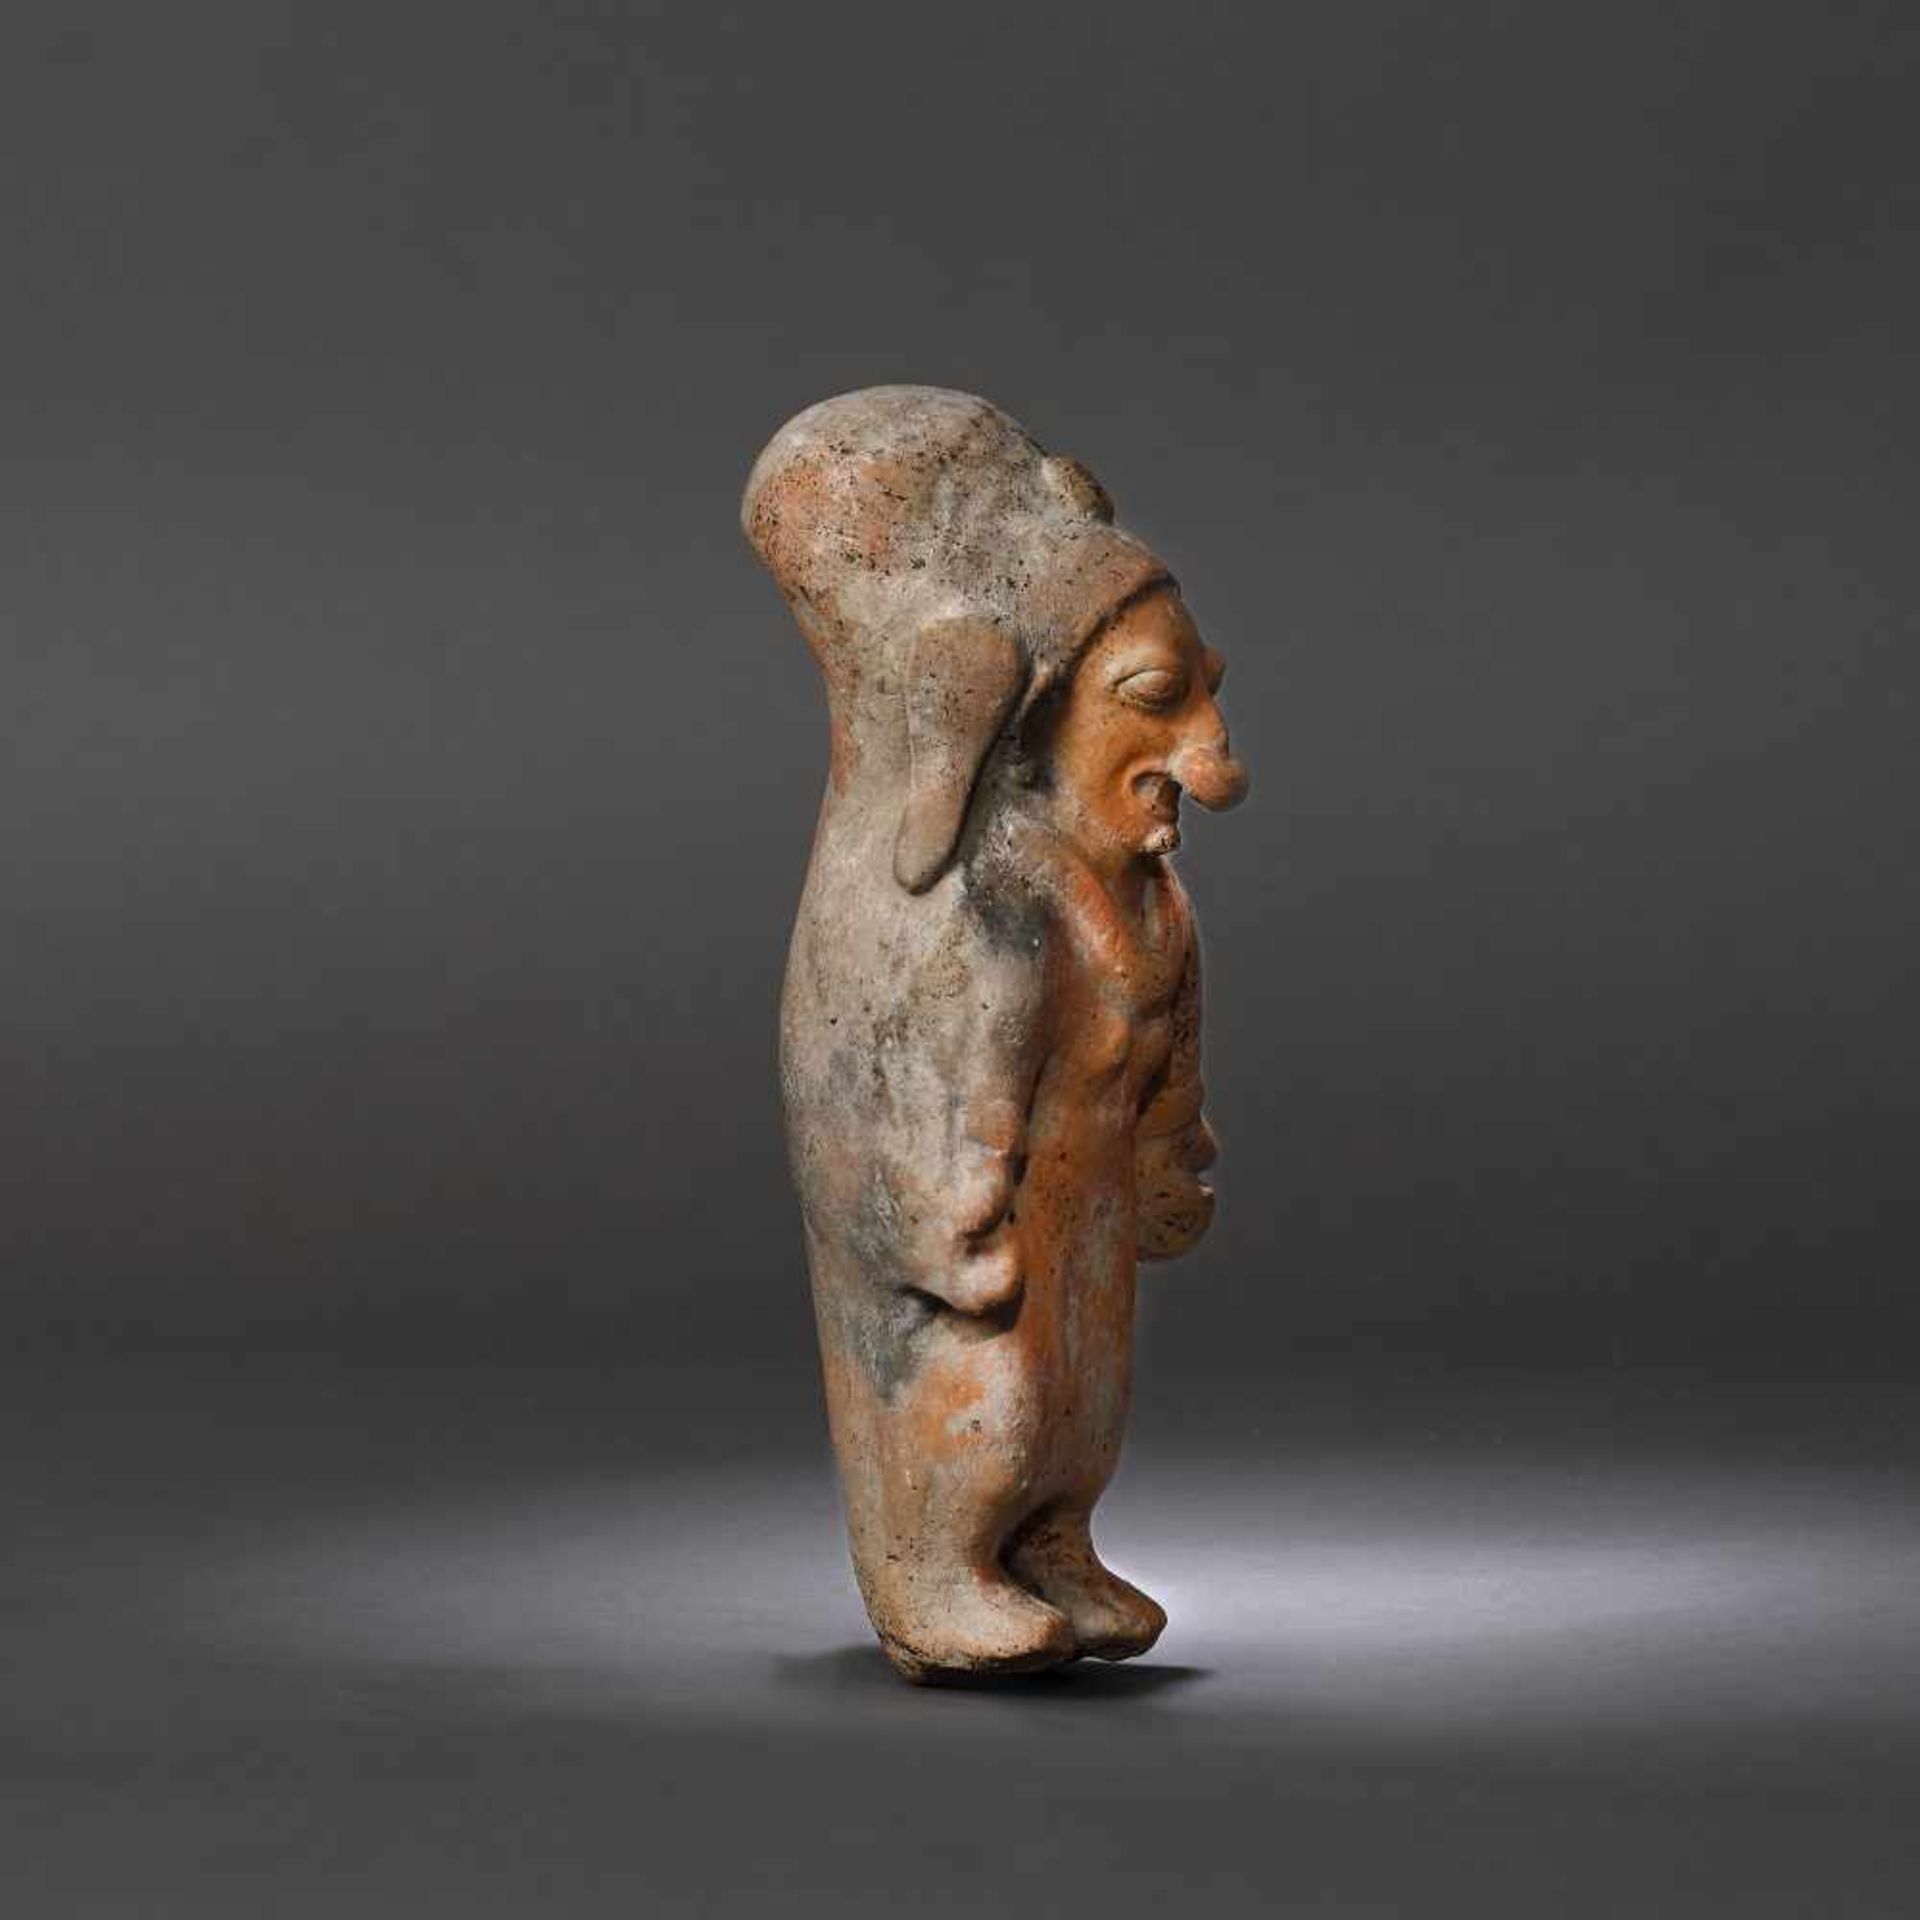 Terracotta statuette, depicting a female figure, Jama Coaque culture, Ecuador, approx. 1,700 years o - Image 3 of 5